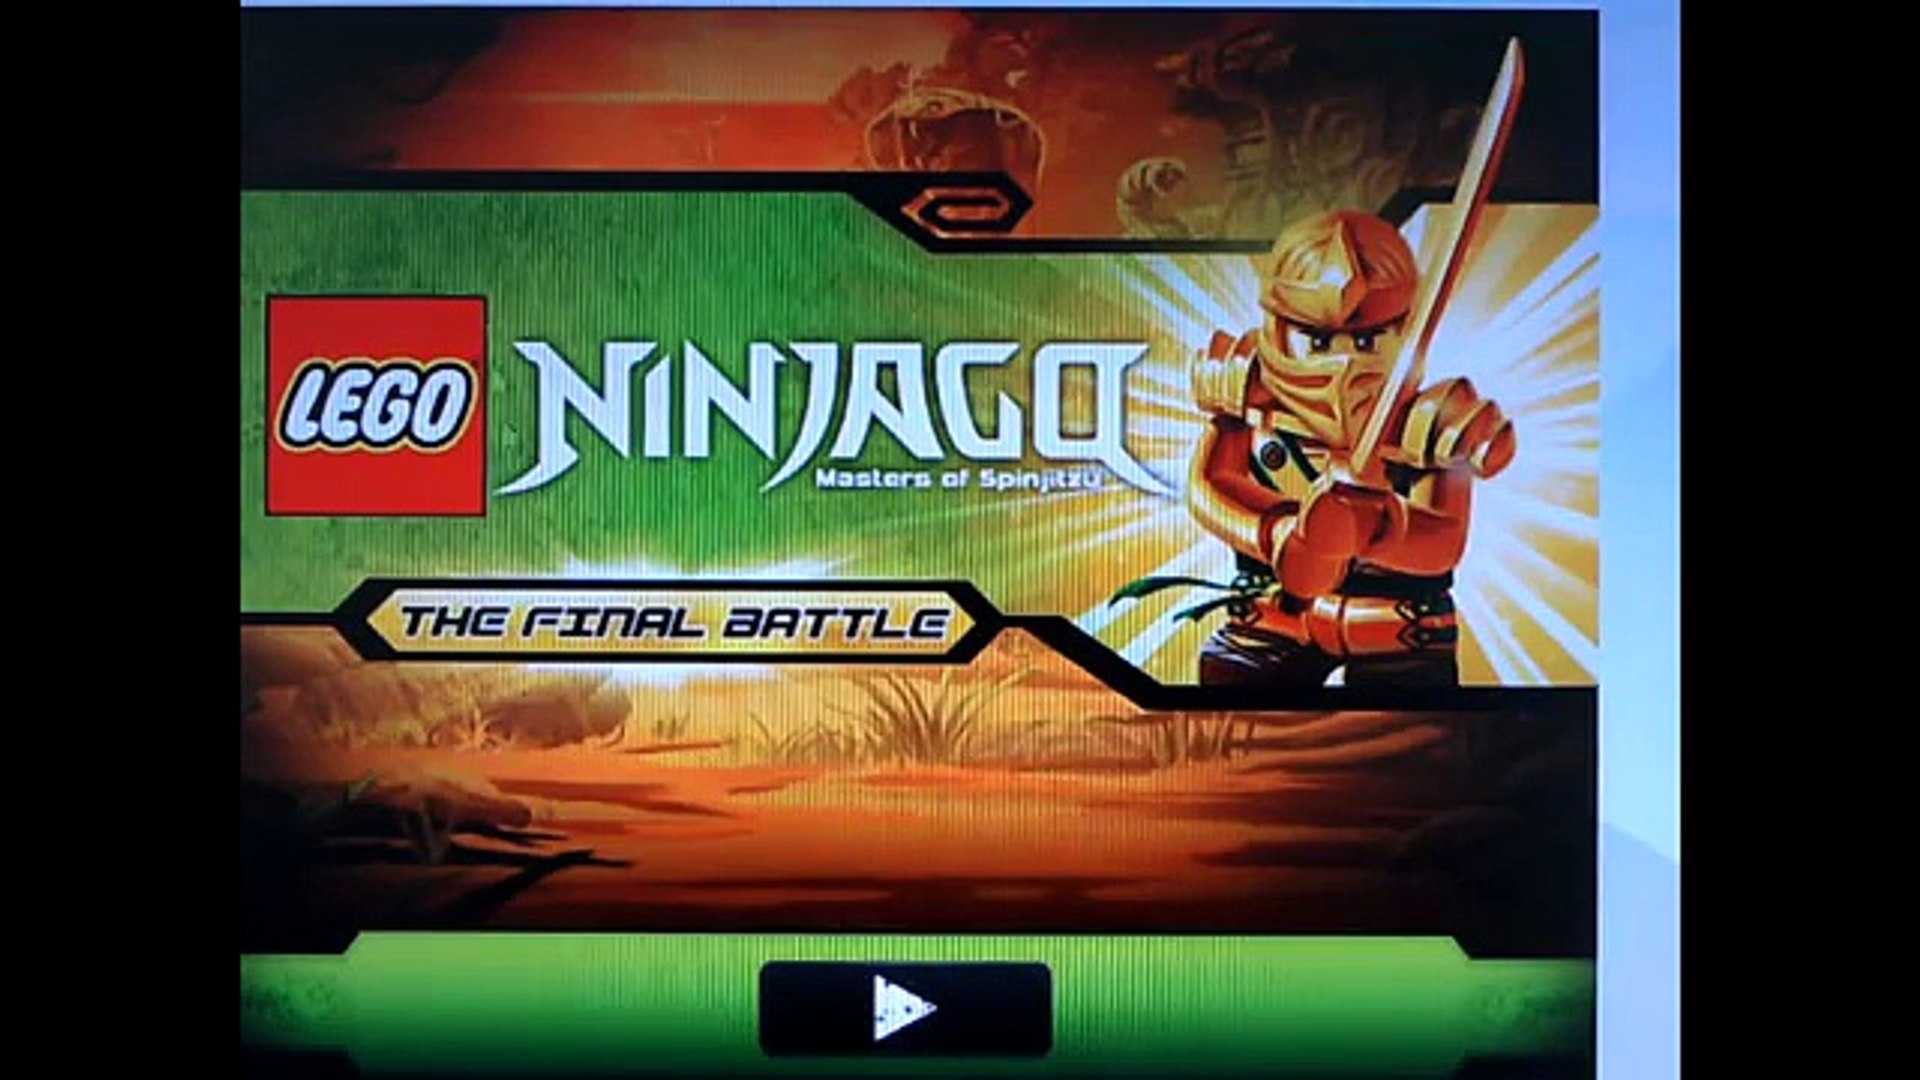 Lego Ninjago Final Battle Game Review - Dailymotion Video